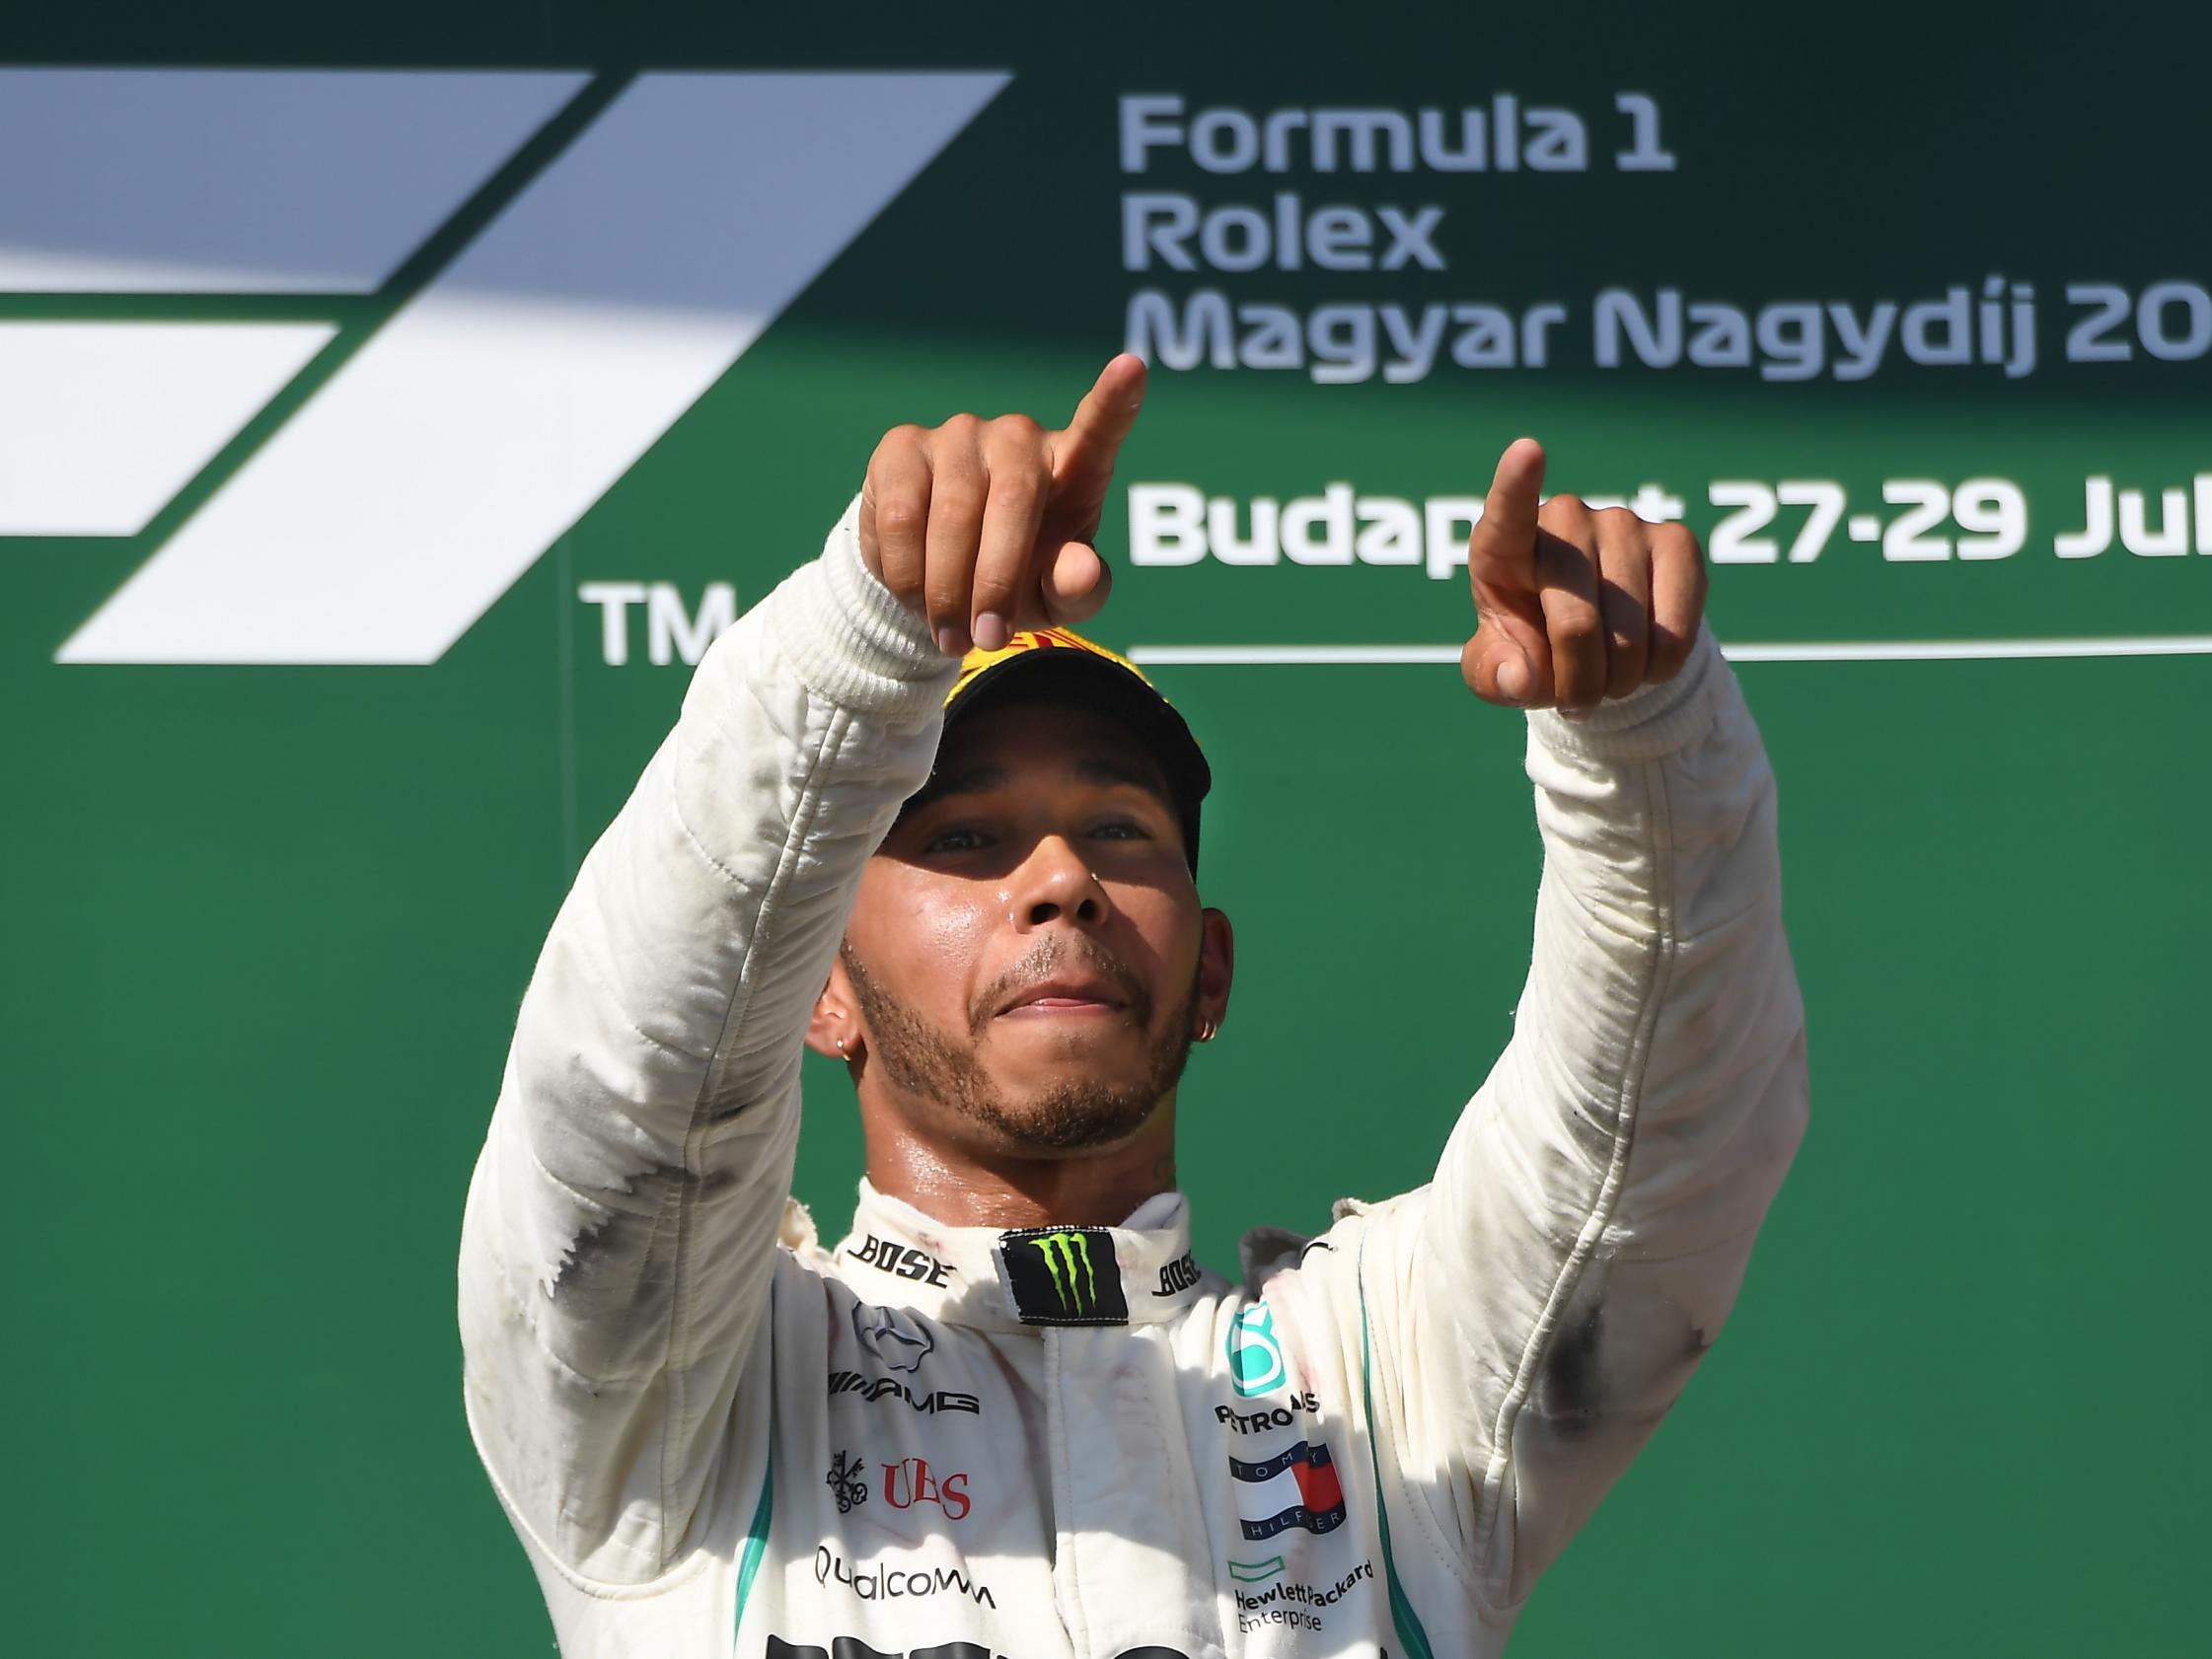 Hamilton celebrates his victory up on the podium